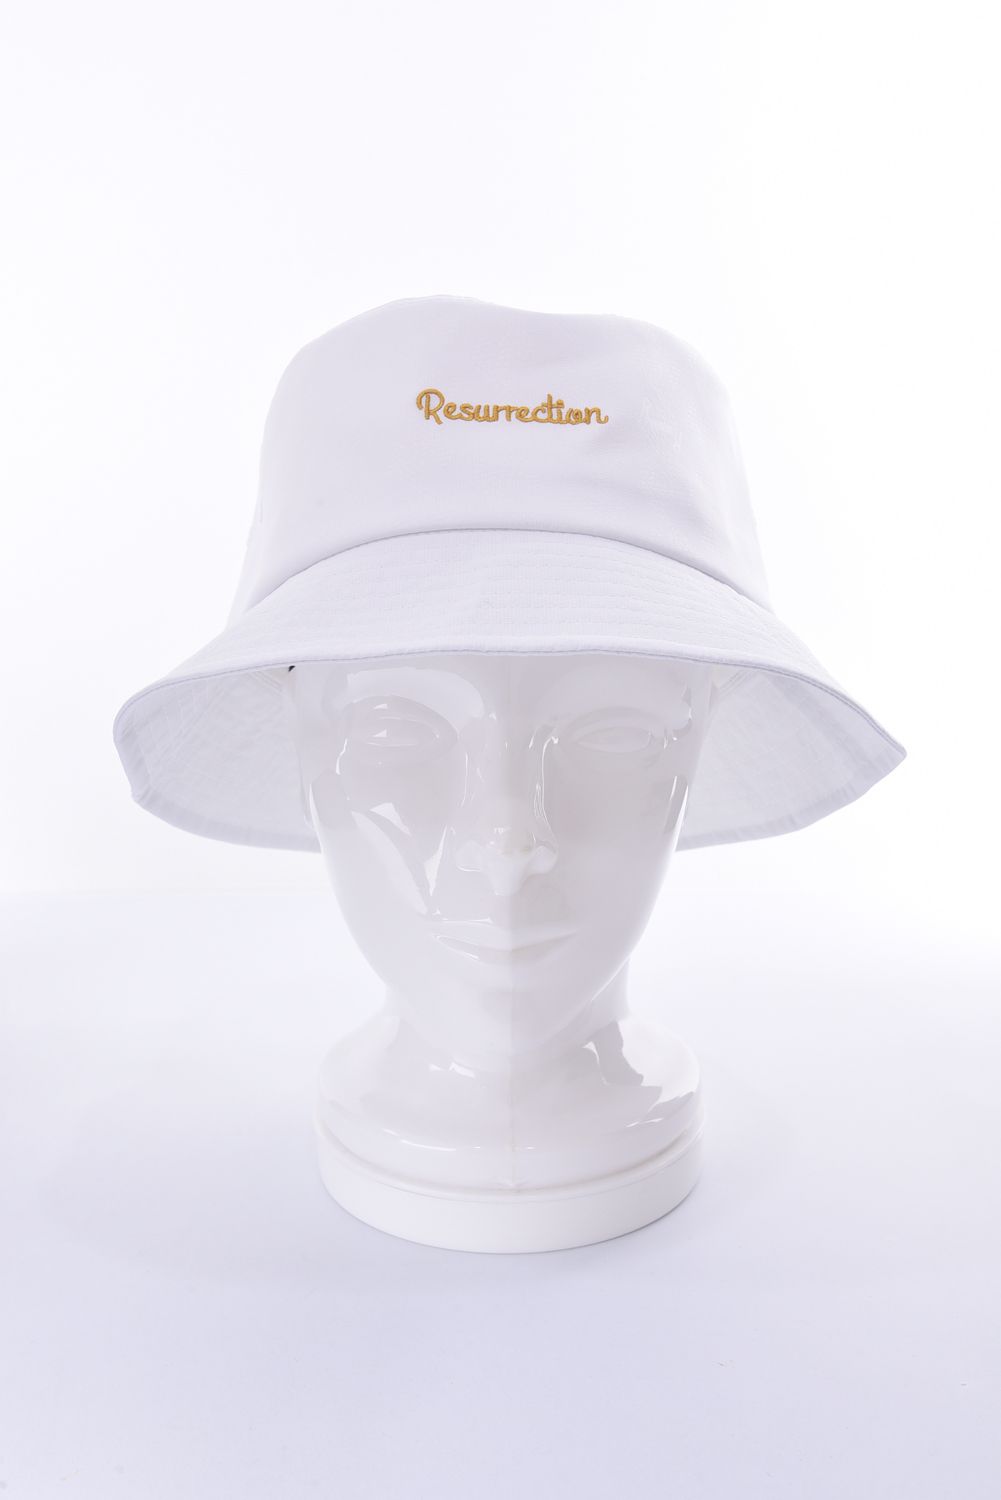 Resurrection - GM BUCKET HAT / ブランド オリジナルテキスタイル 